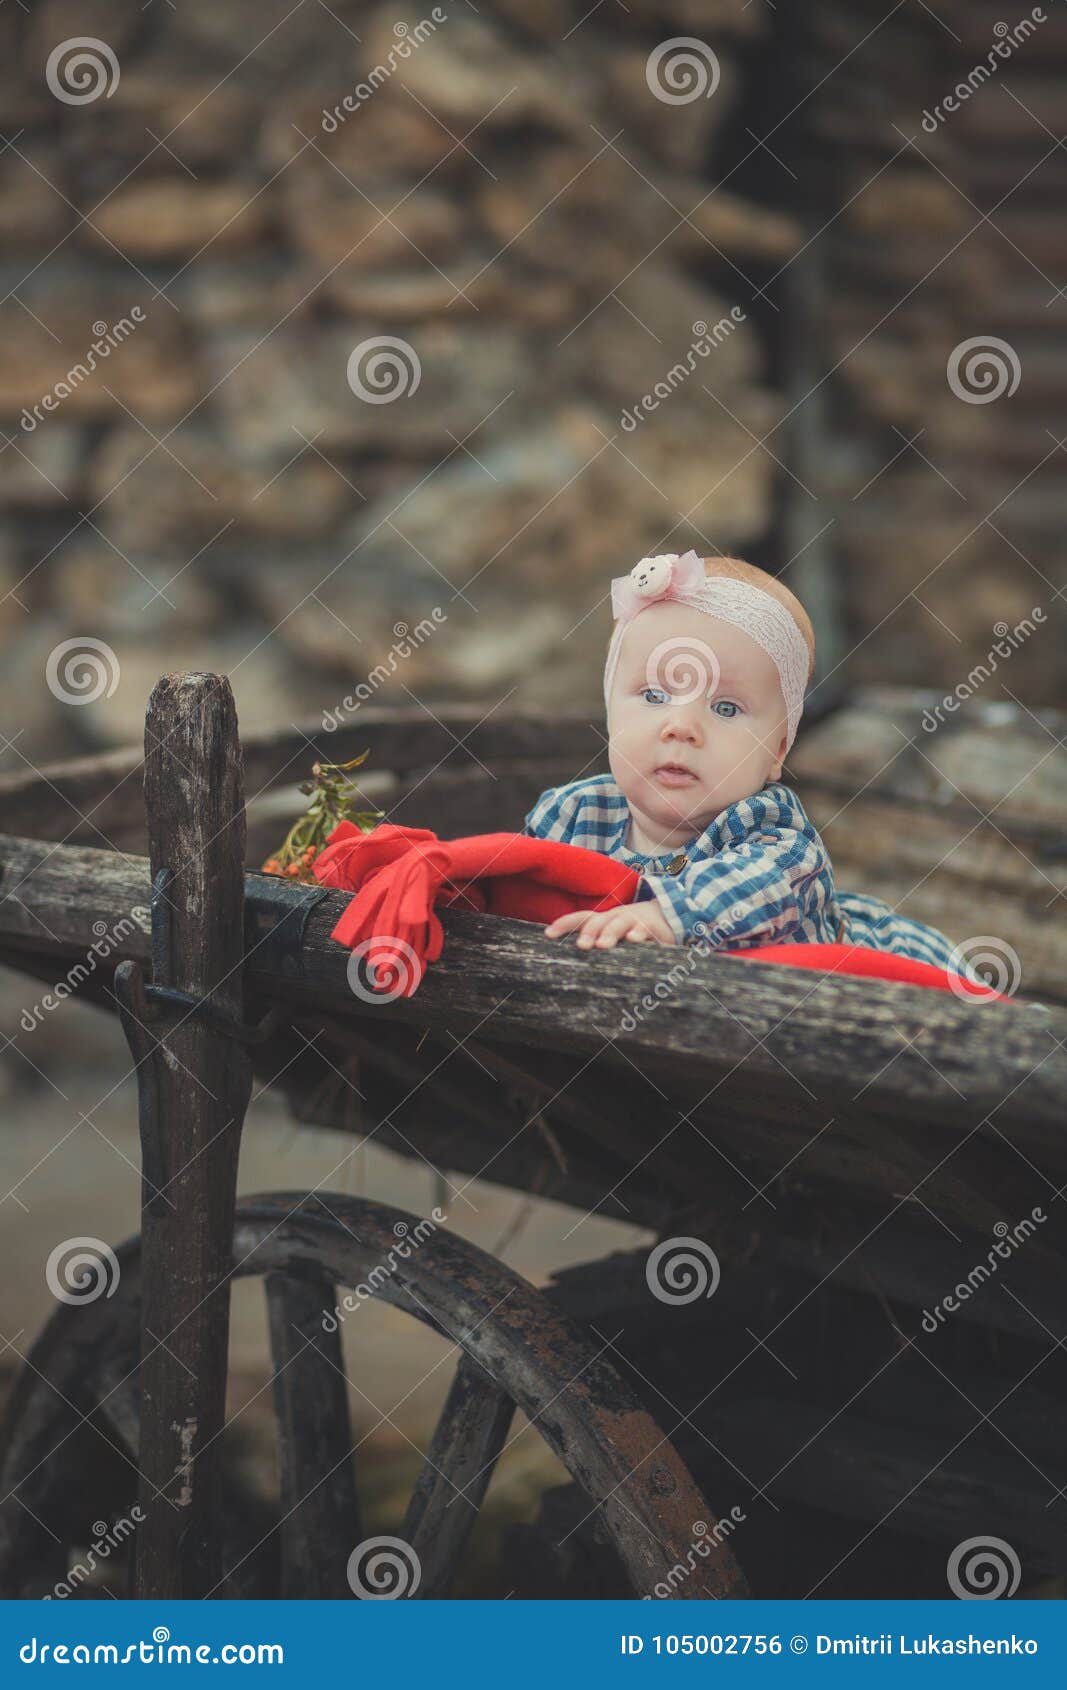 baby newborn girl with blue eyes wearing tartan check dress shirt and pink shawl bandana posing on wooden old style retro wagon ca